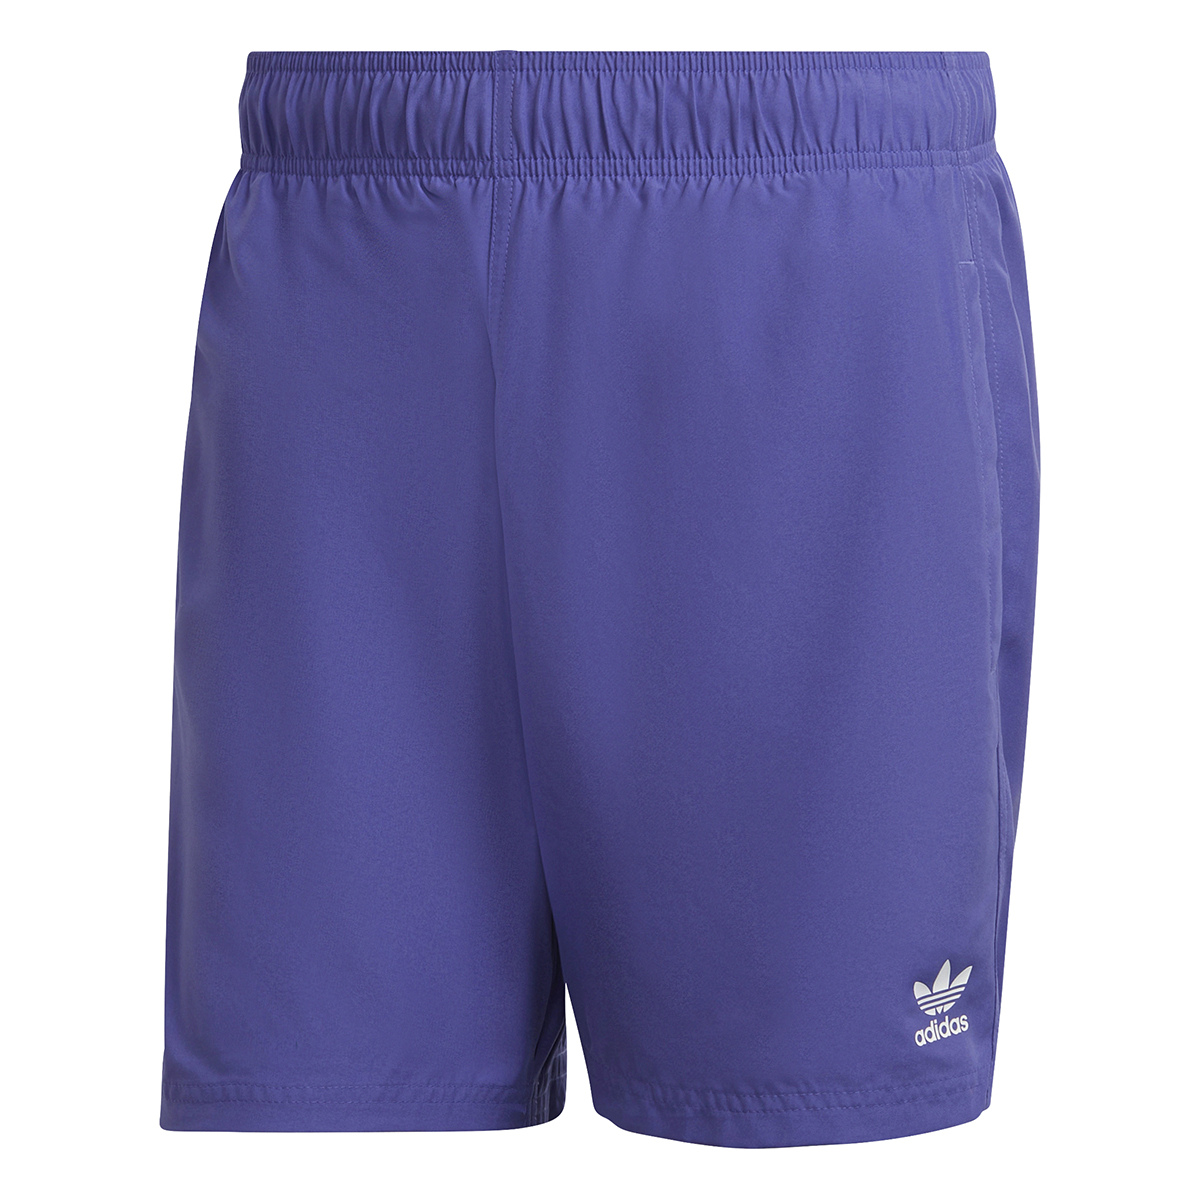 Adidas Originals Essentials Ss, Purple